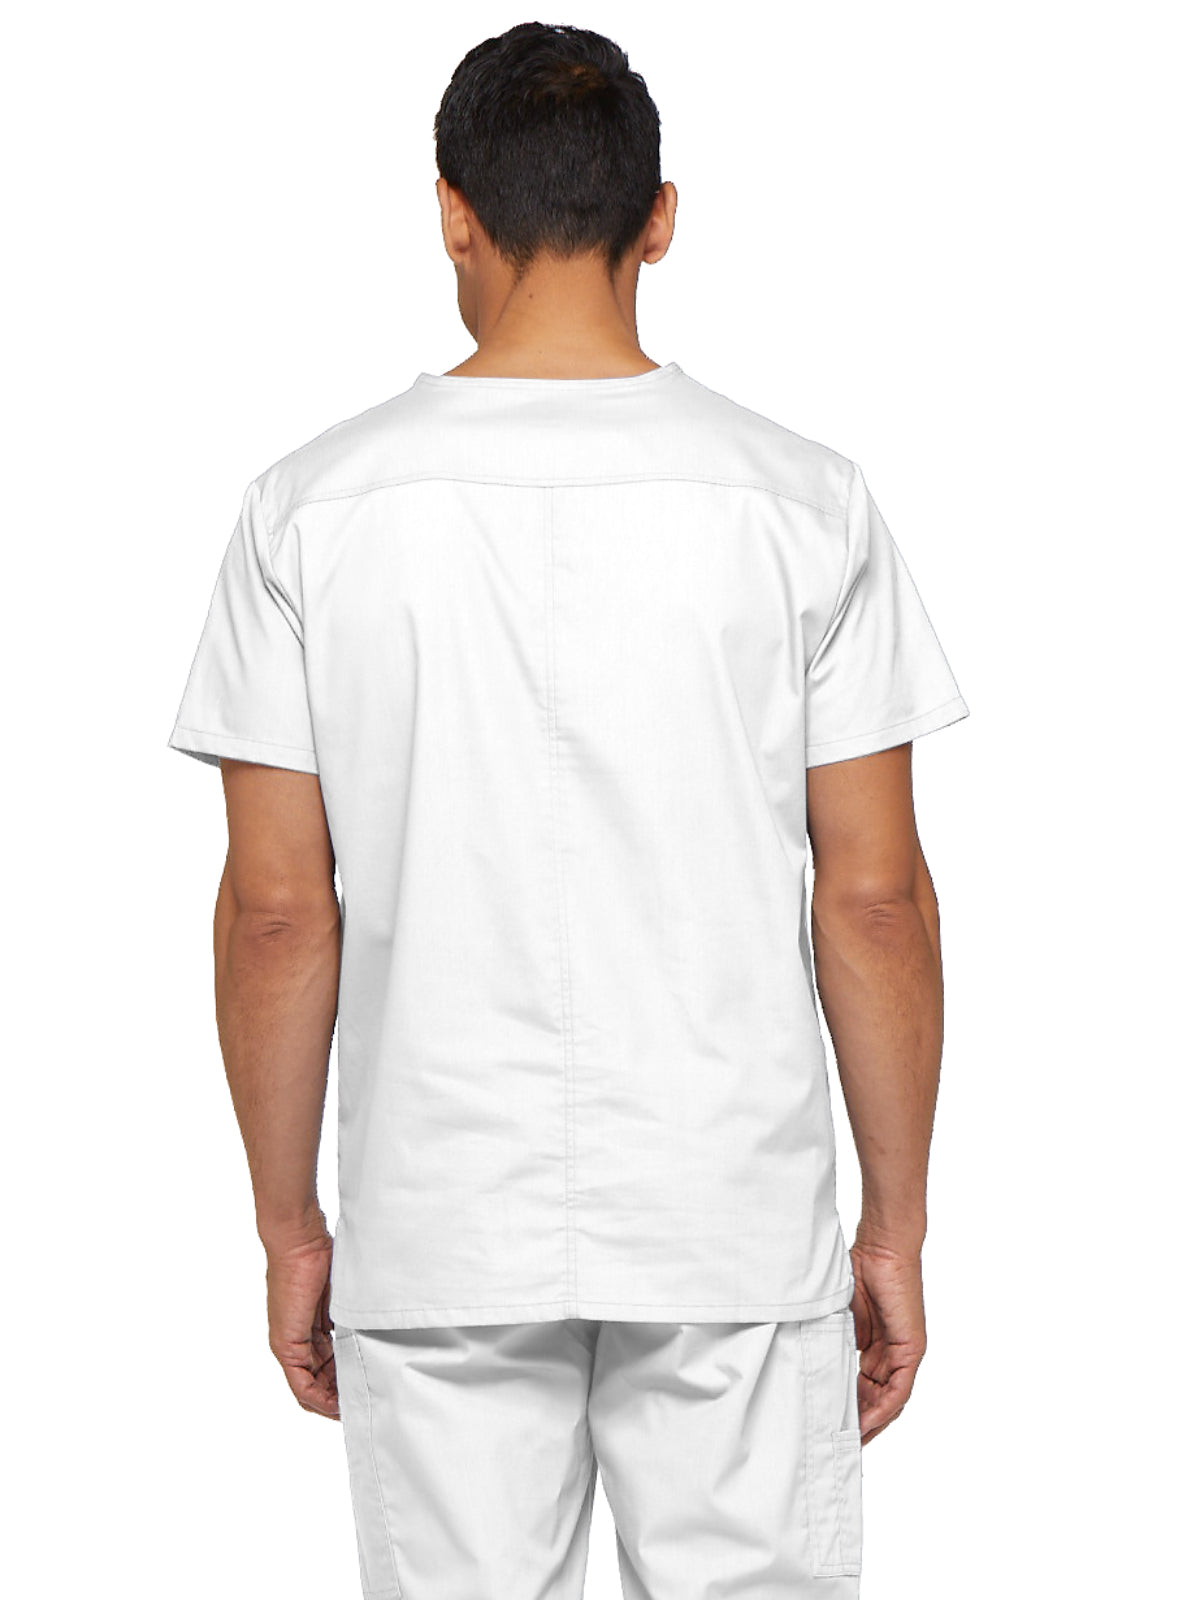 Men's 5-Pocket V-Neck Scrub Top - 81906 - White